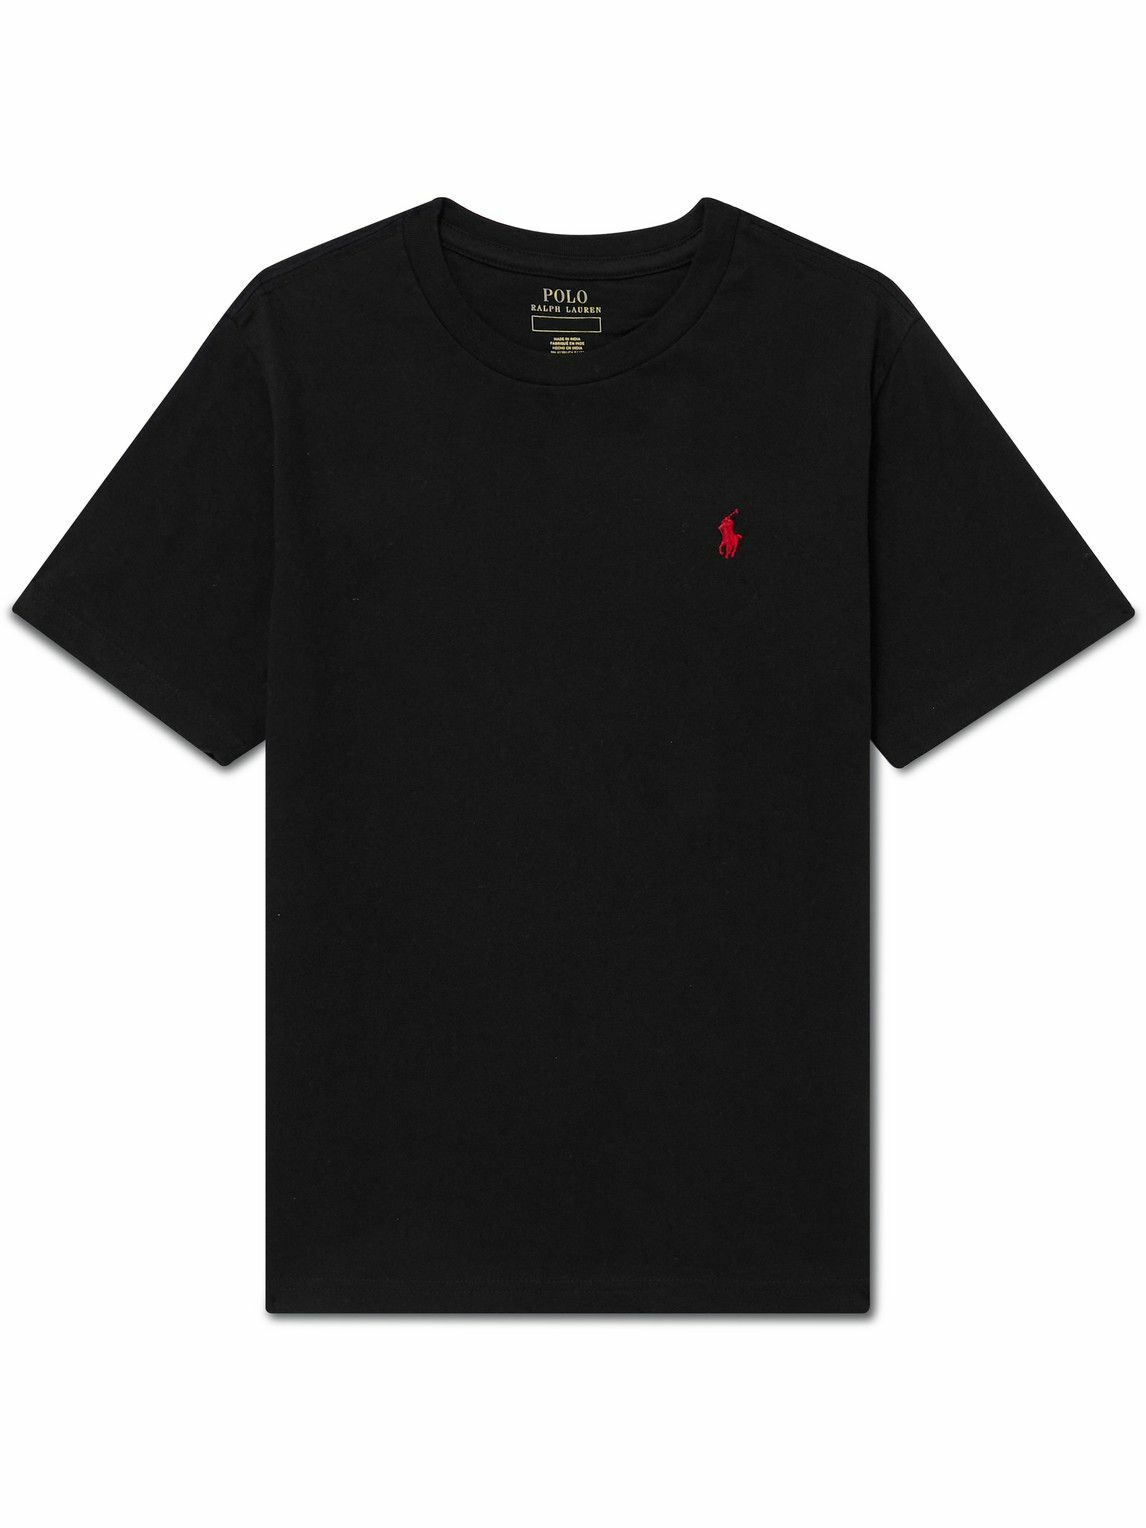 Polo Ralph Lauren Kids - Logo-Embroidered Cotton-Jersey T-Shirt - Black